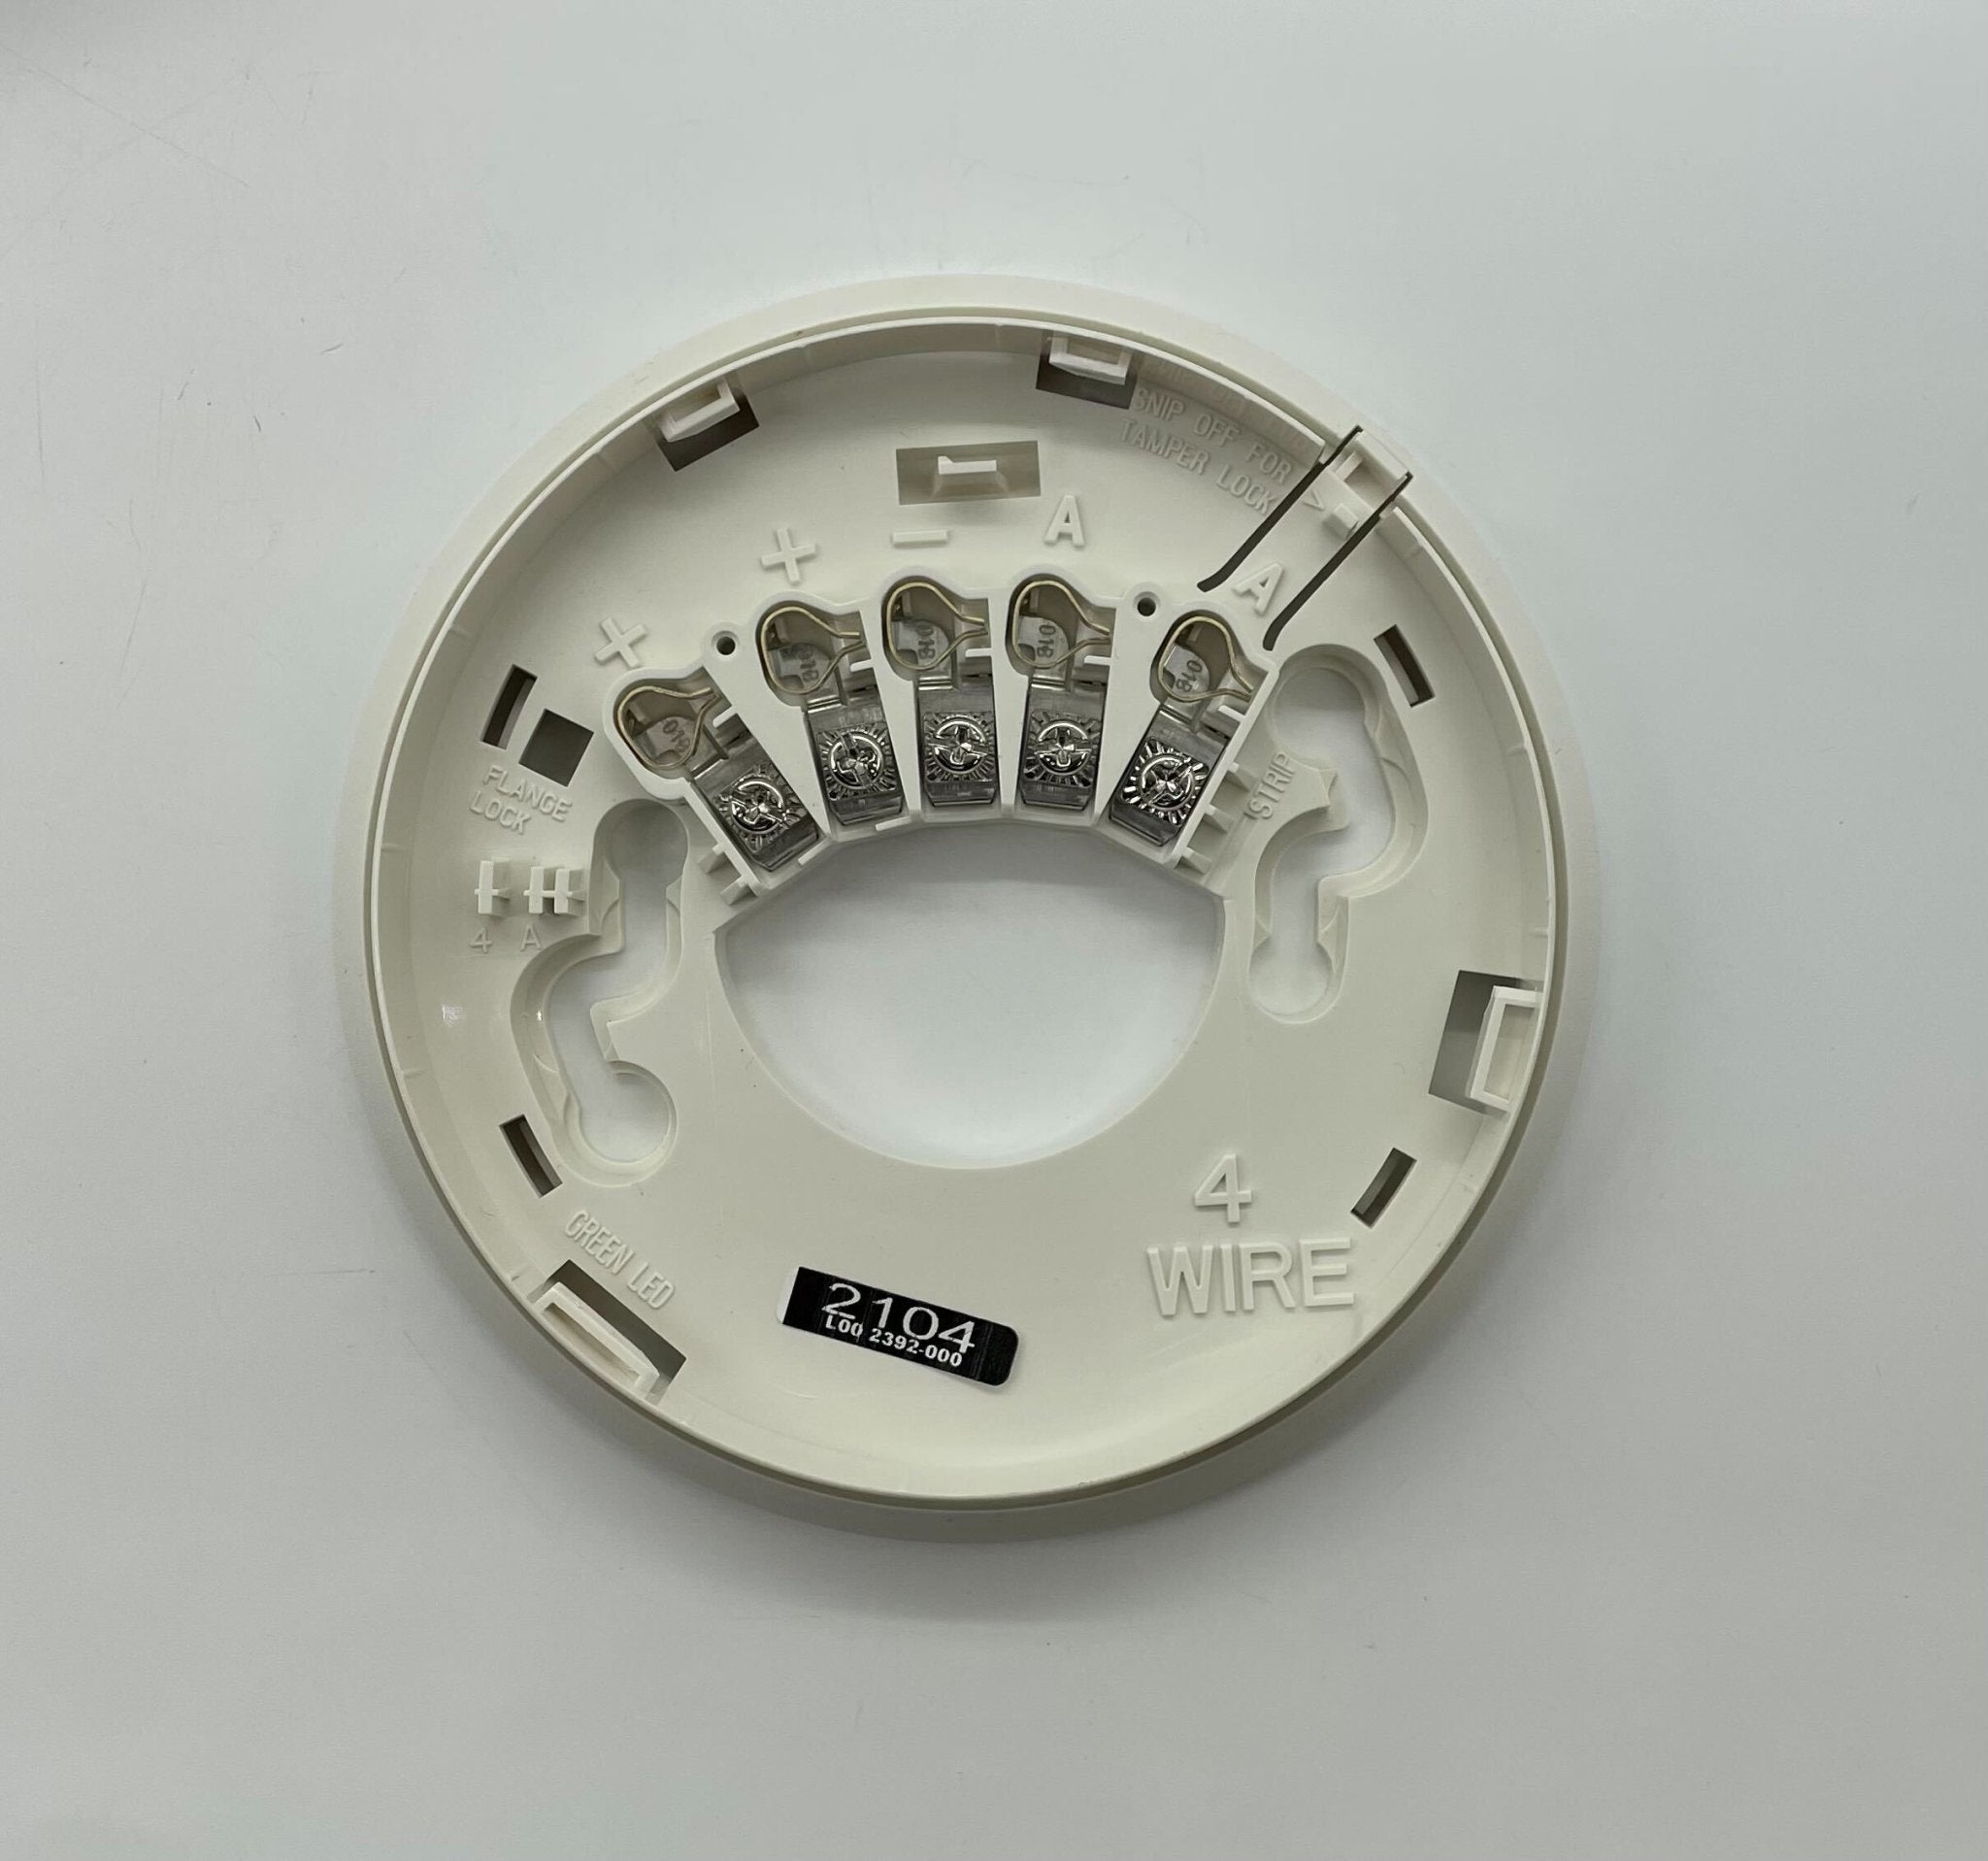 System Sensor 4WTA-B - The Fire Alarm Supplier